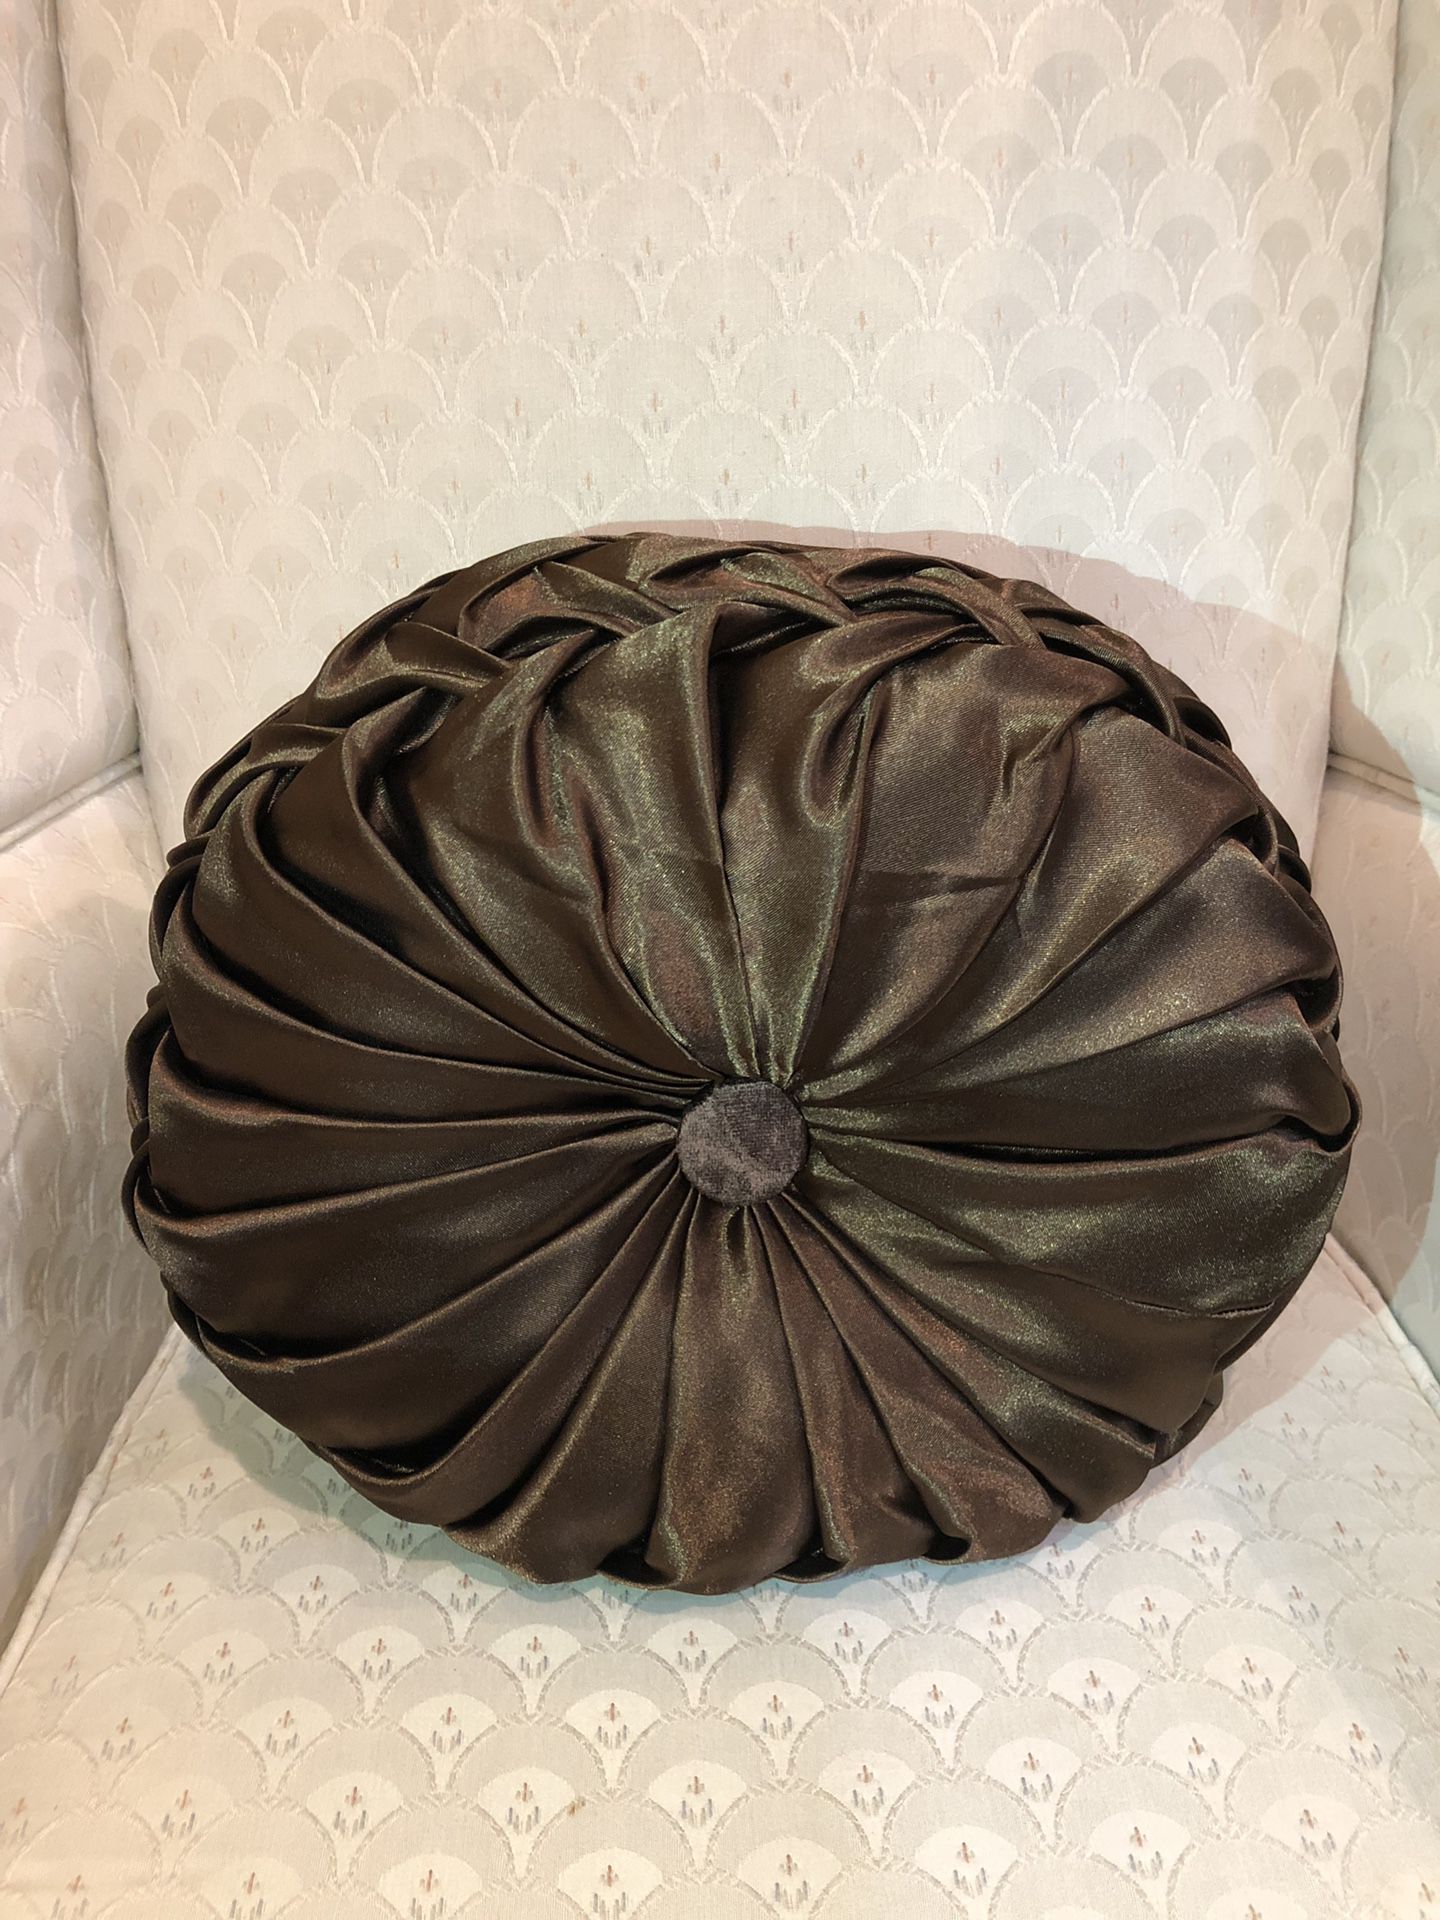 Brand new handmade decorative pillow satin